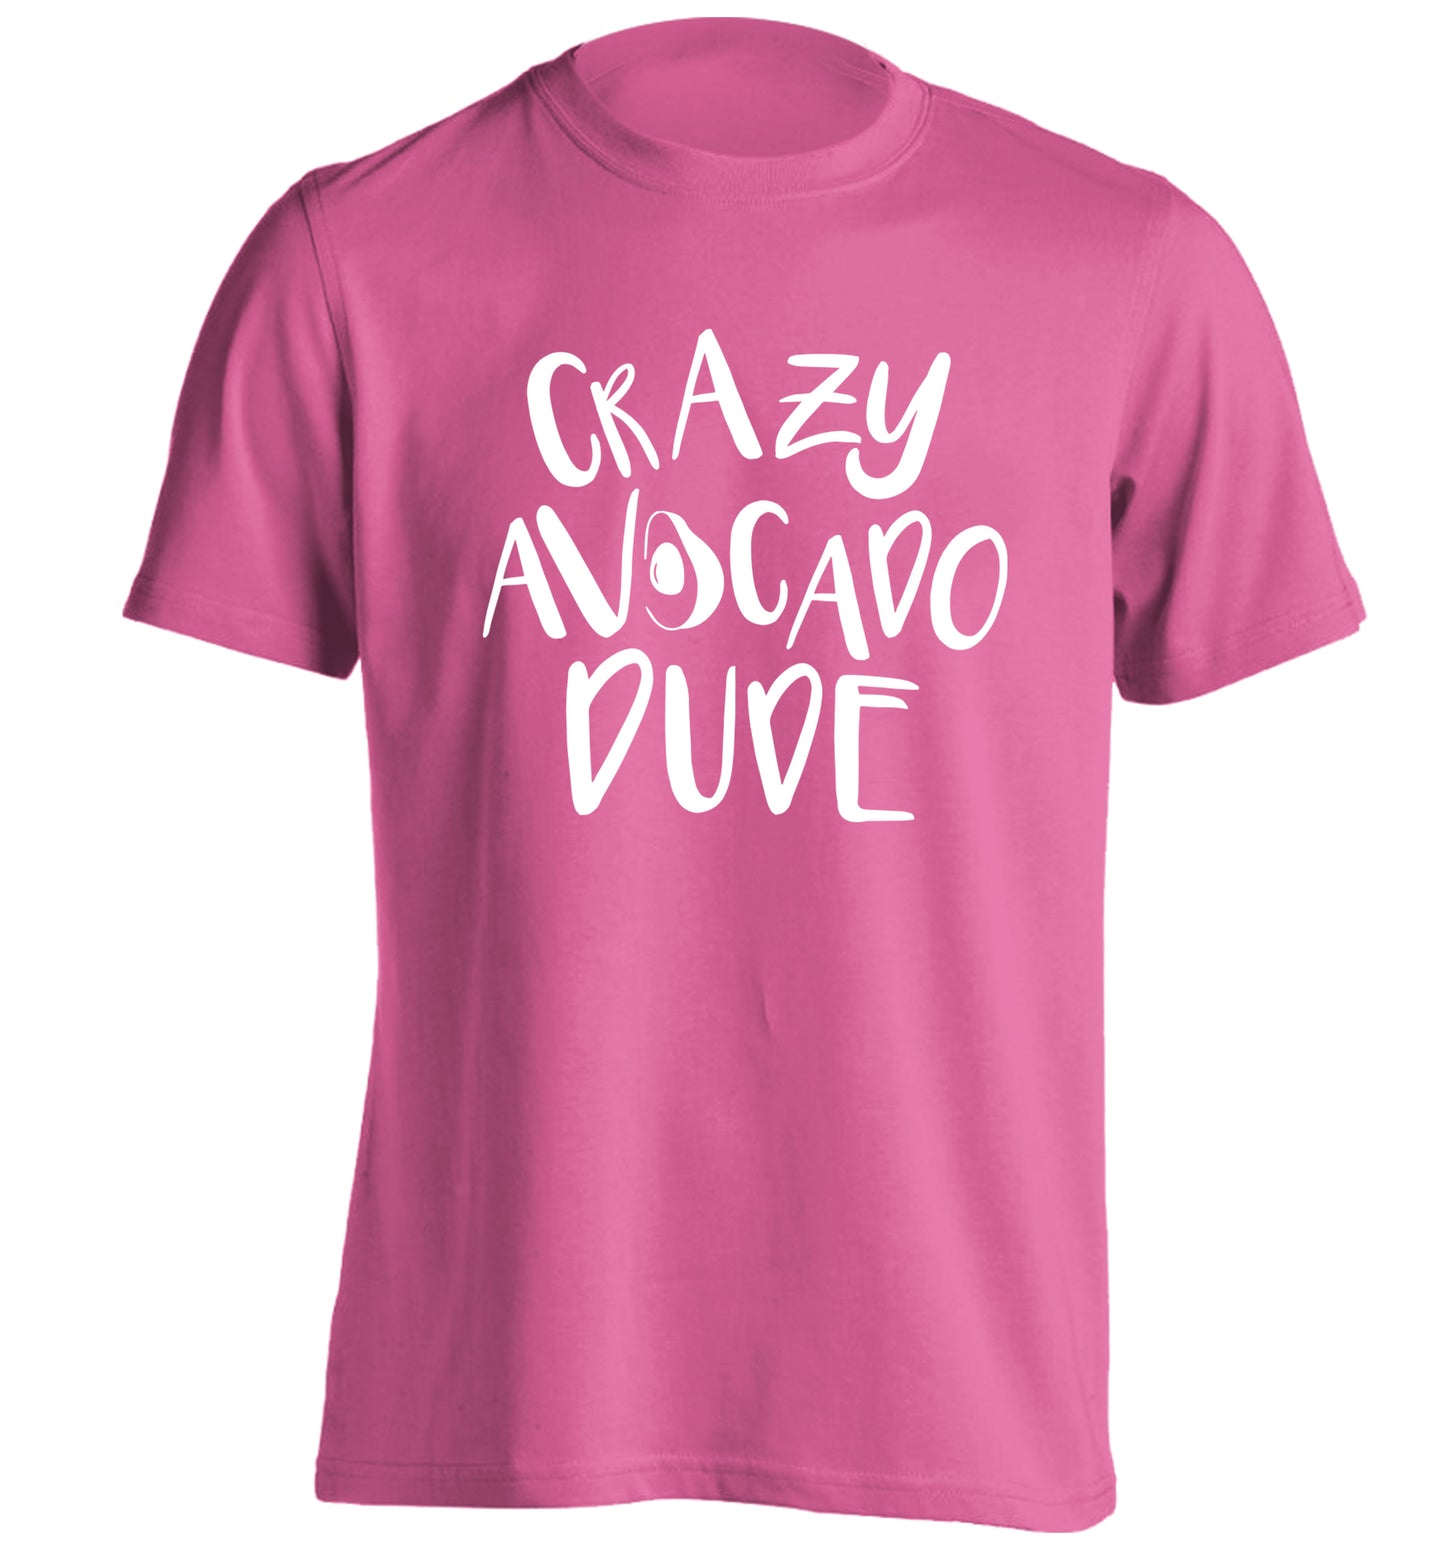 Crazy avocado dude adults unisex pink Tshirt 2XL